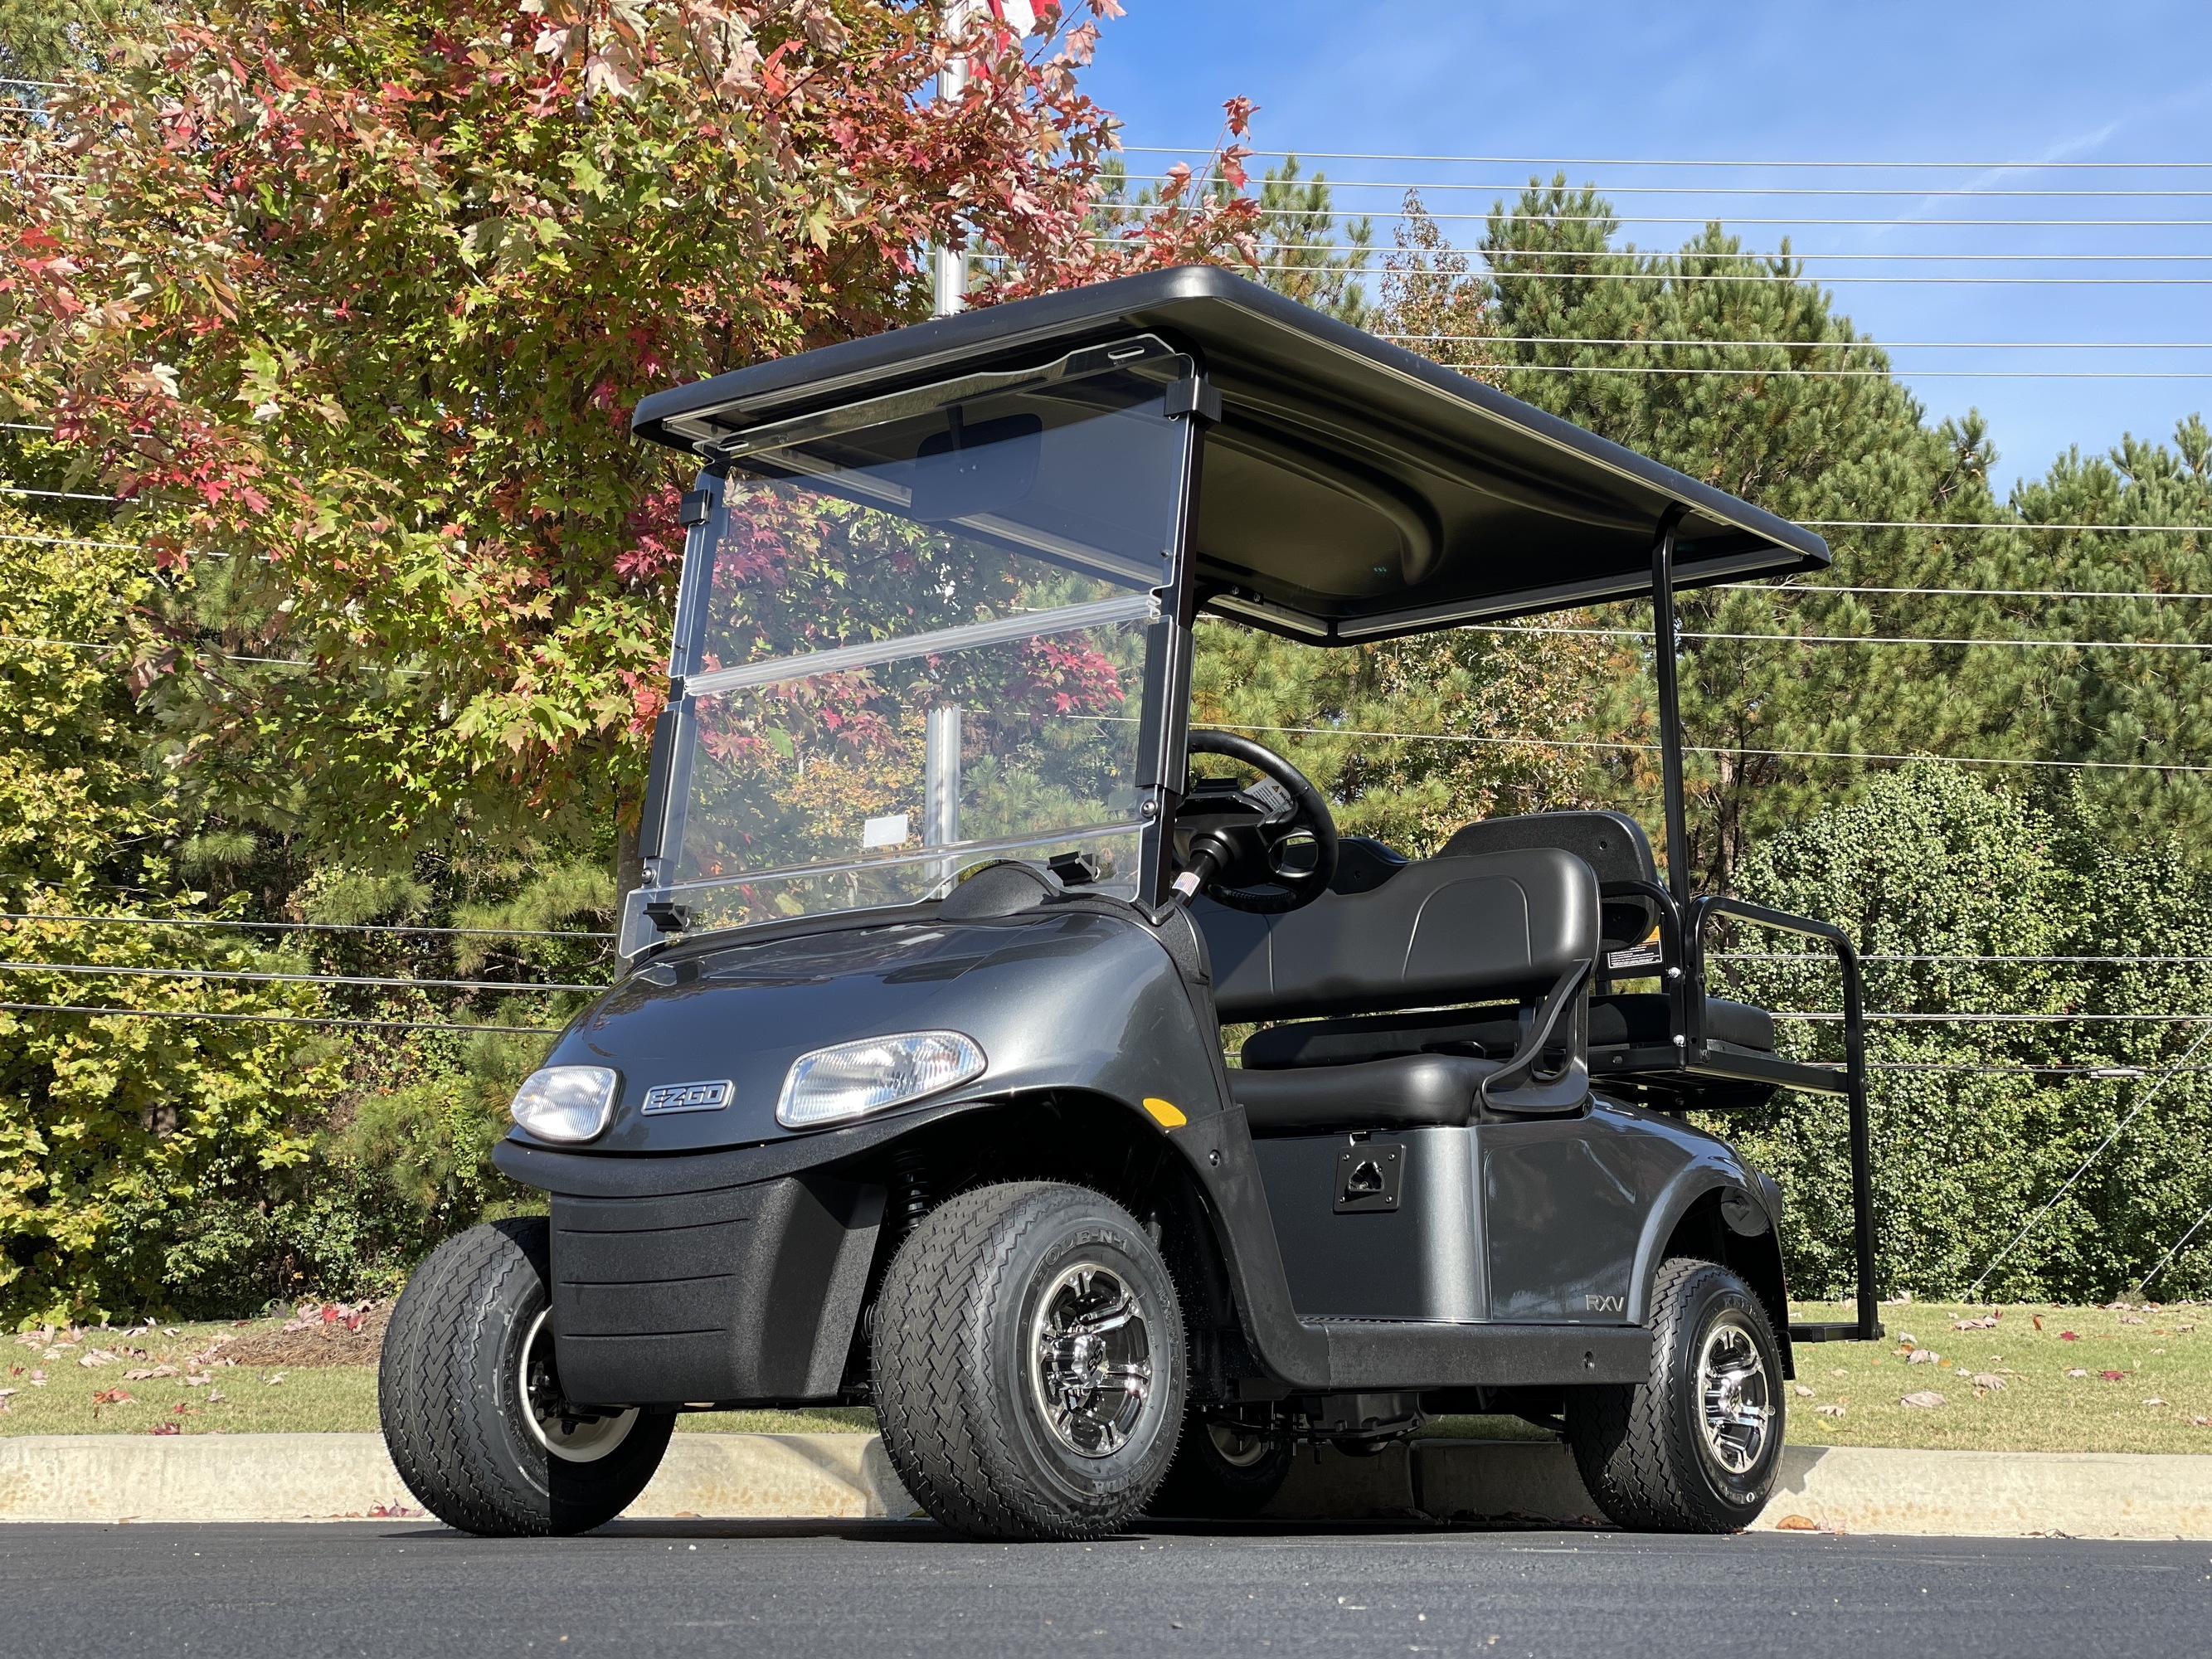  E-Z-GO Freedom RXV Electric Golf Cart